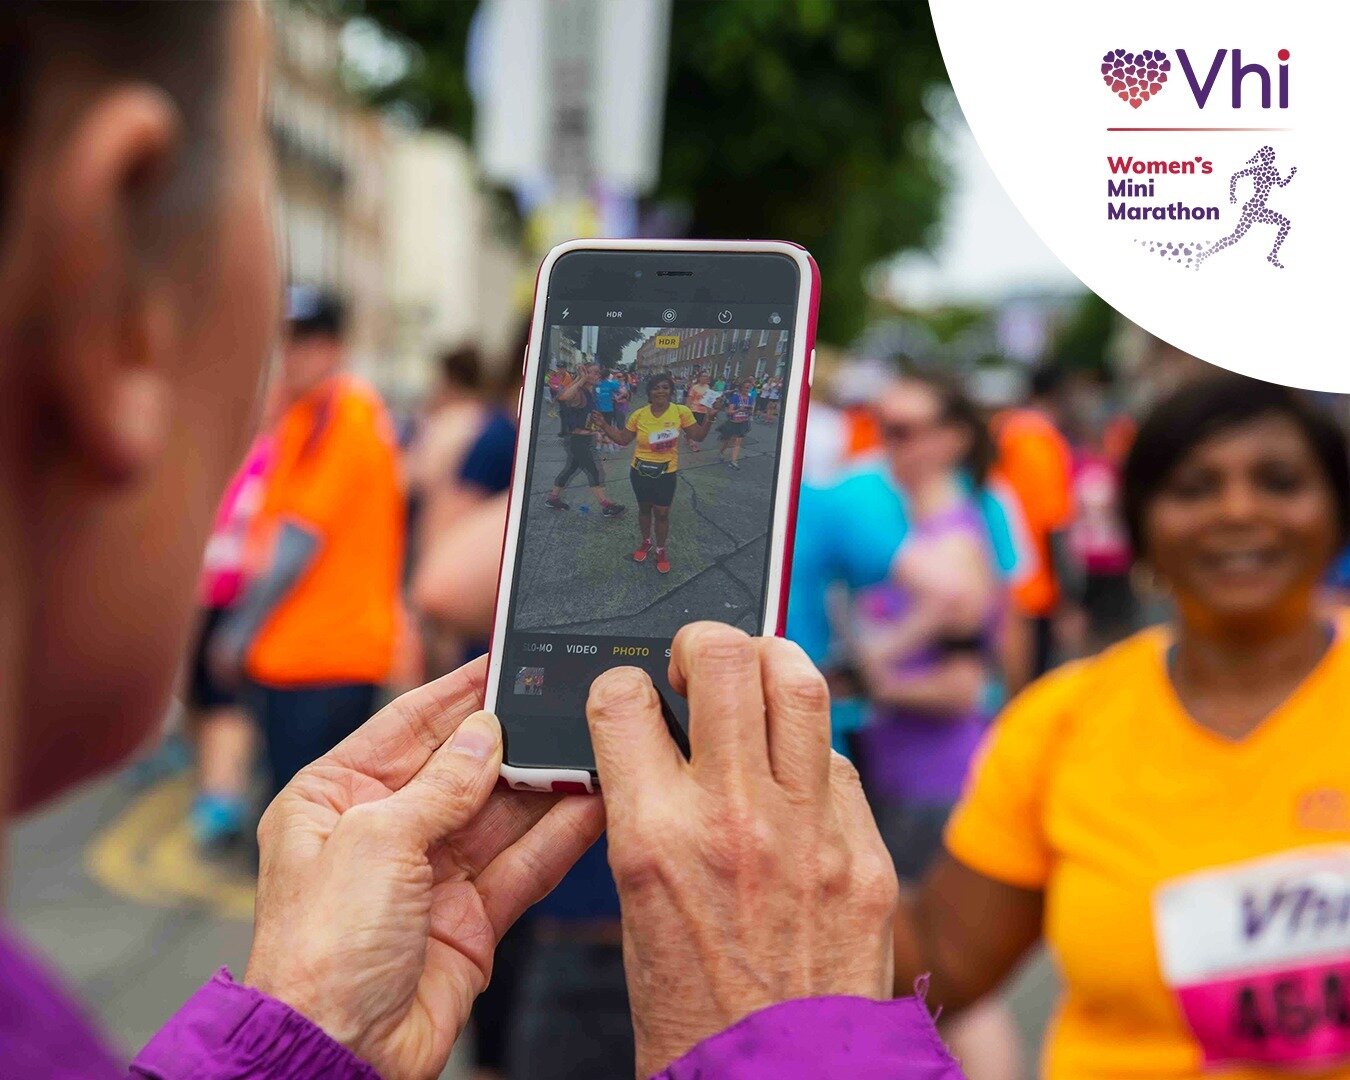 Tell us about your favourite Vhi Women's Mini Marathon memory!

#hearttoheart #VhiWMM #Dublin #Ireland #10k